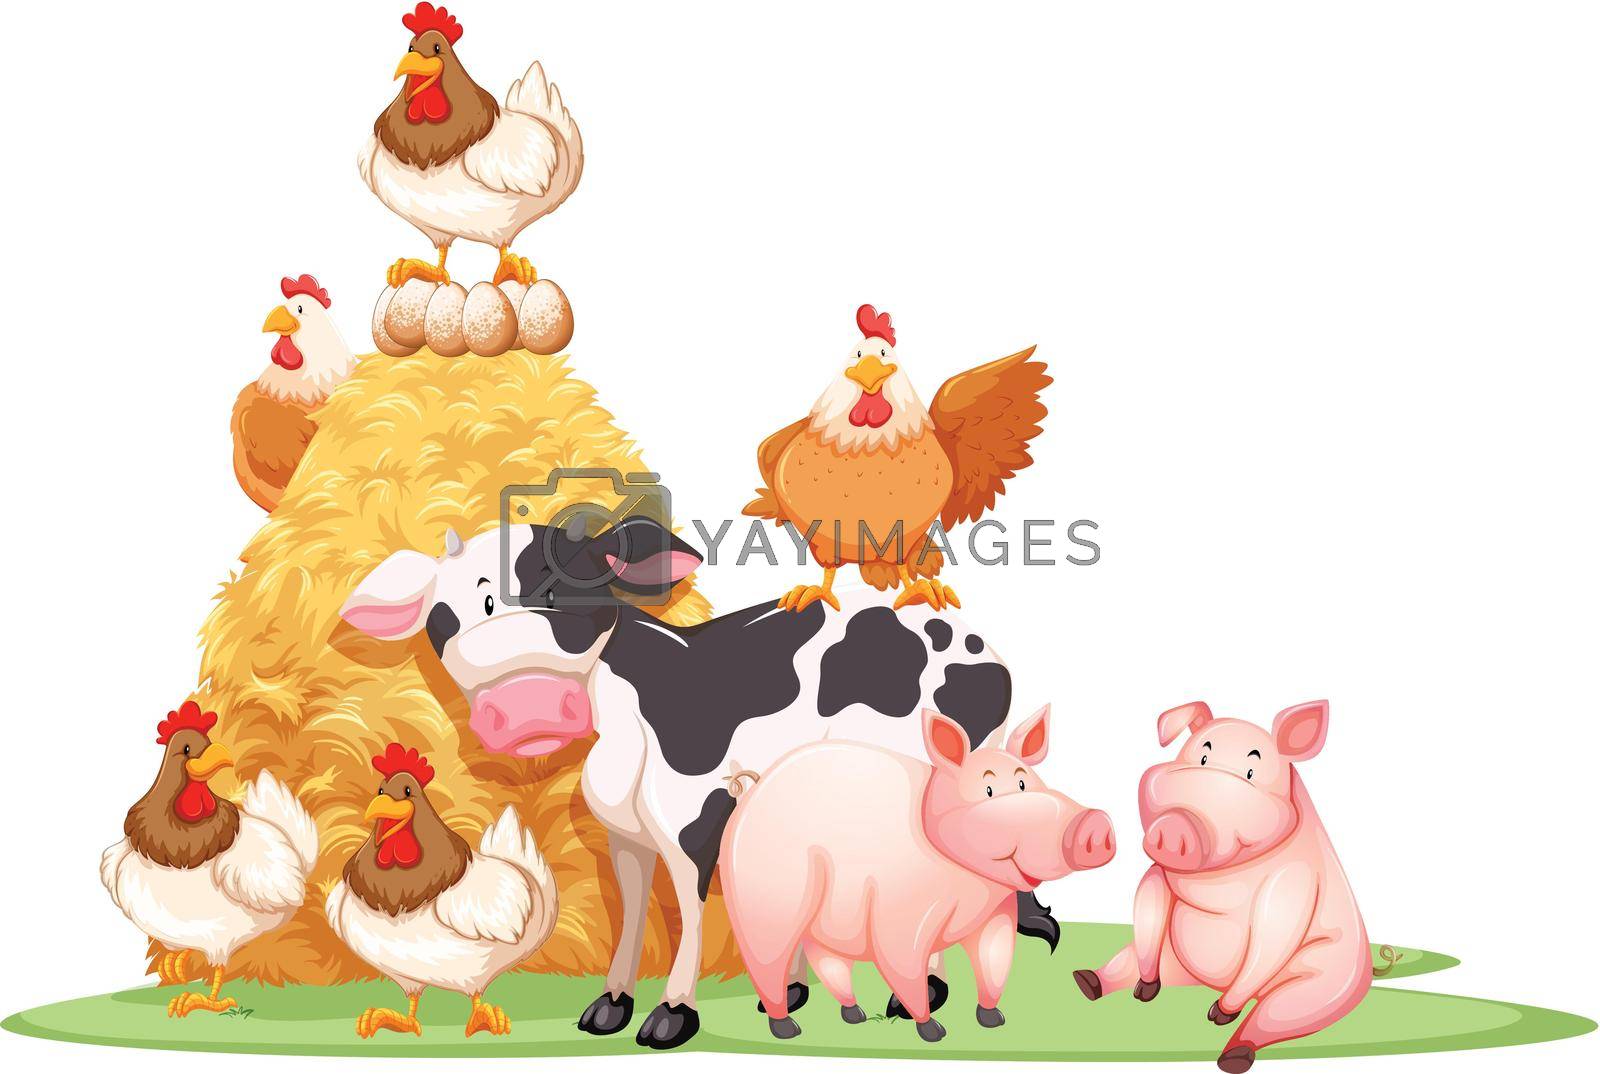 Farm animals with haystack illustration